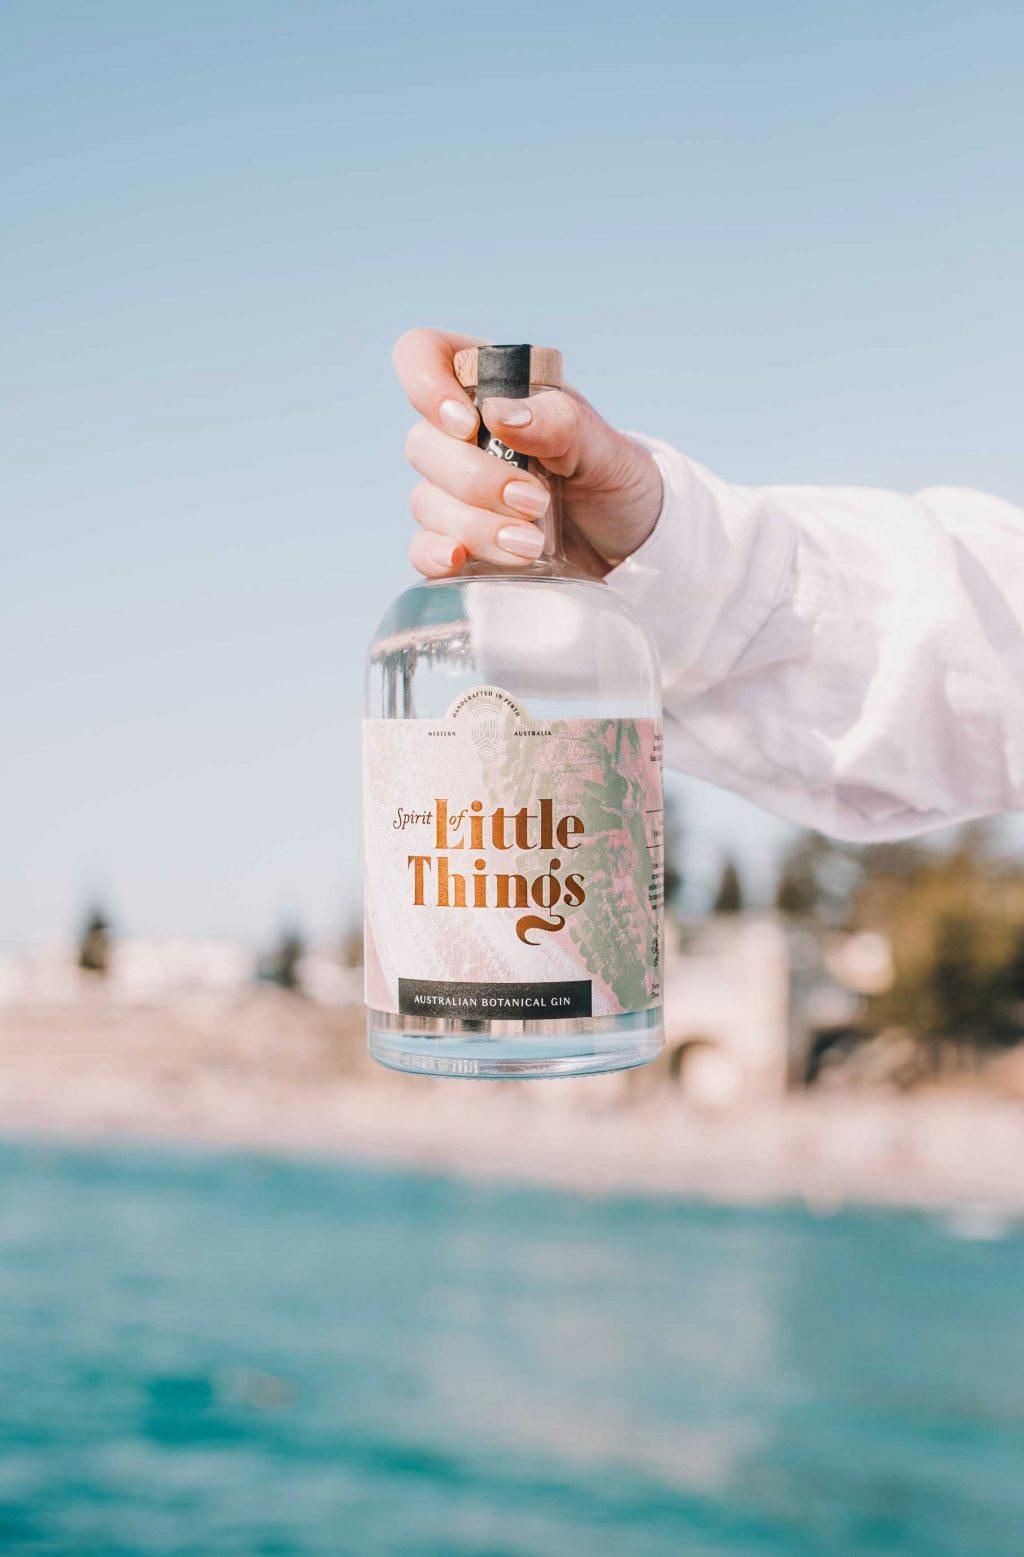 Spirit of Little Things Gin